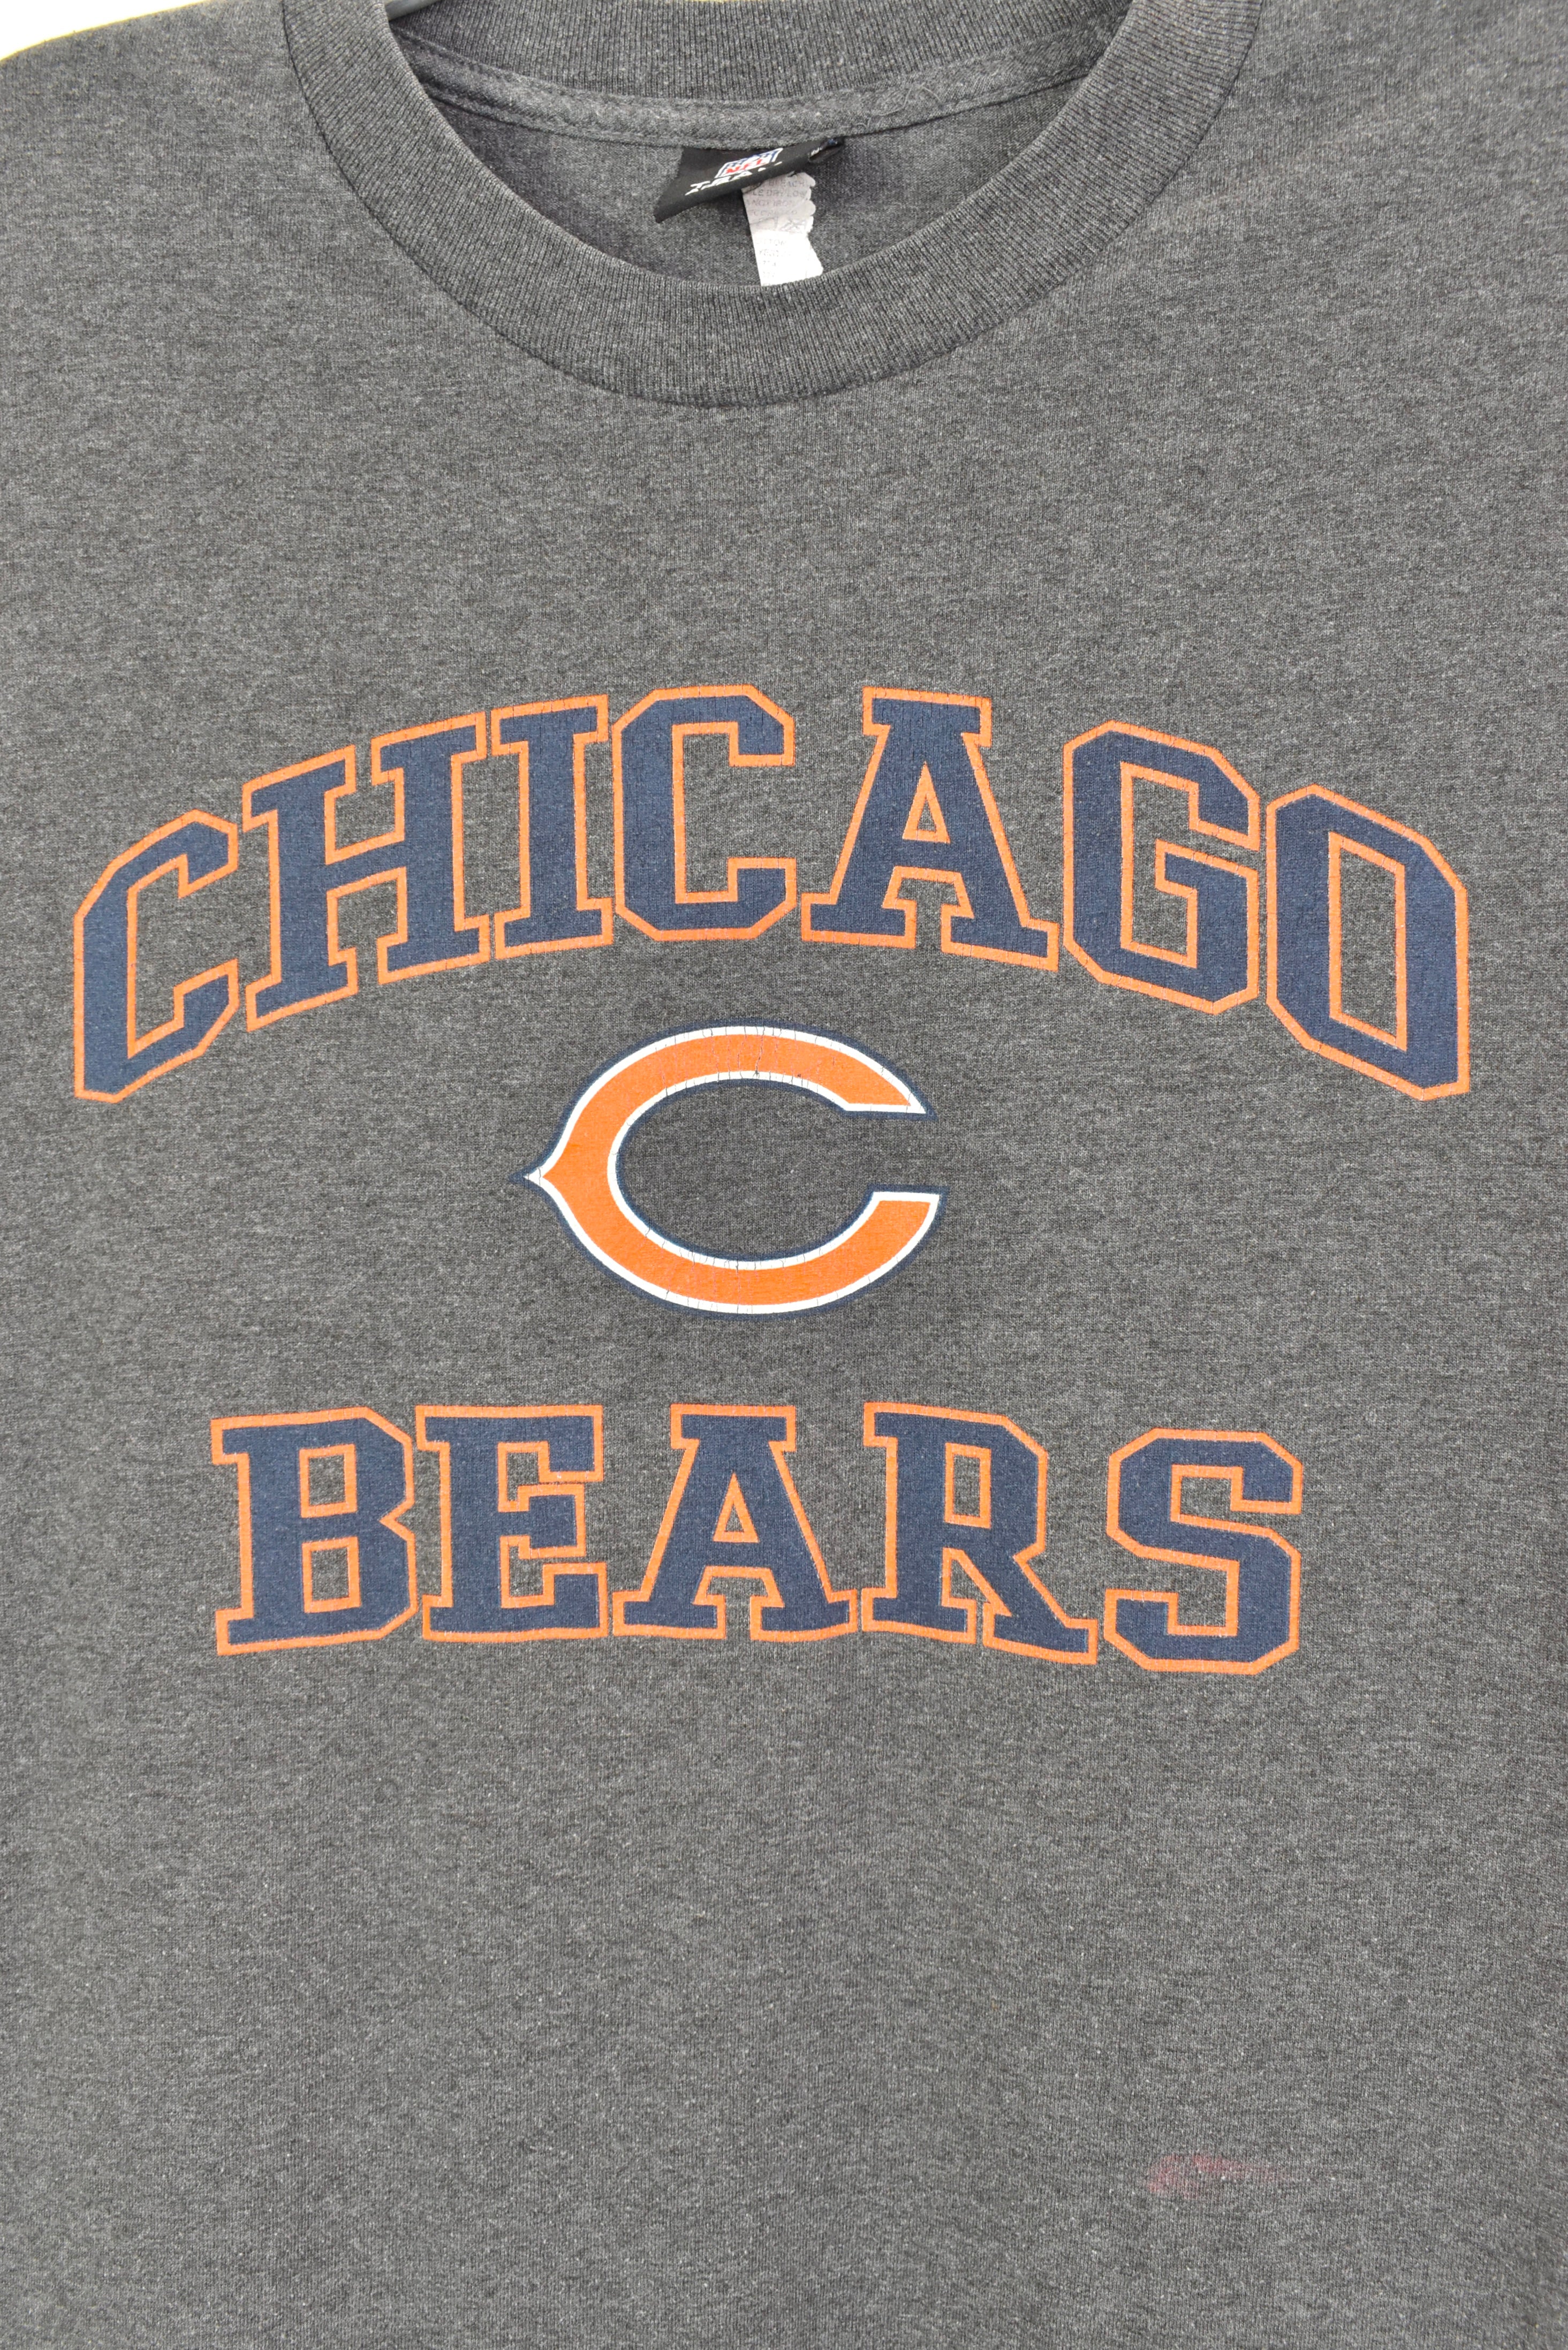 Vintage Chicago Bears shirt, NFL short sleeve graphic tee - XXL, dark grey PRO SPORT